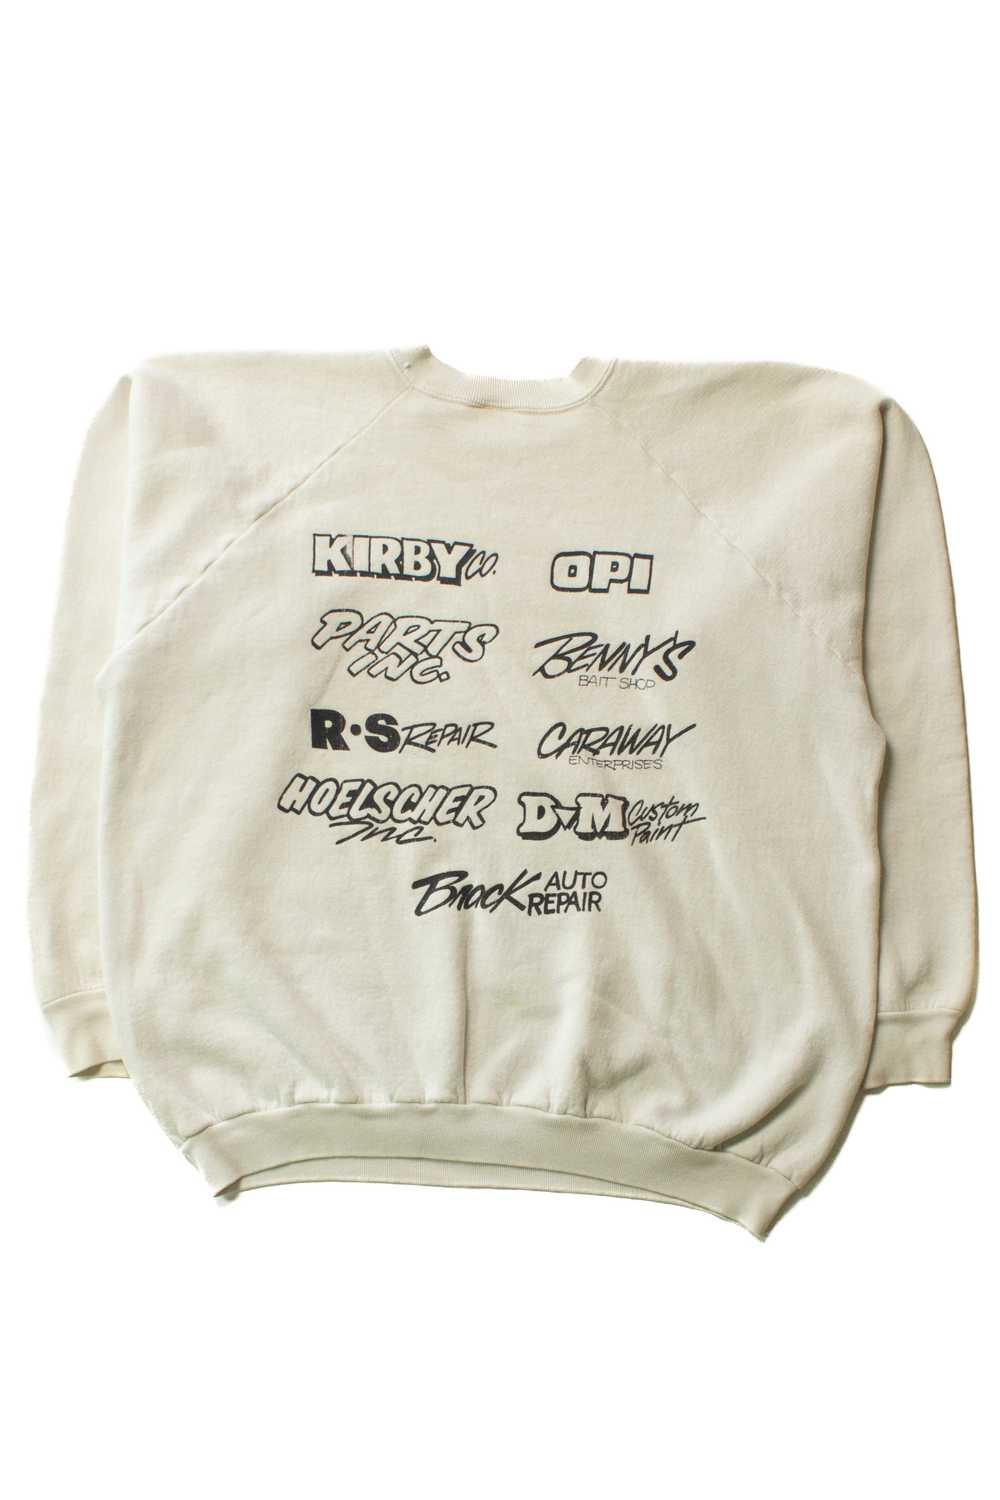 Vintage Chadd Brown Cambridge Sweatshirt (1990s) - image 2